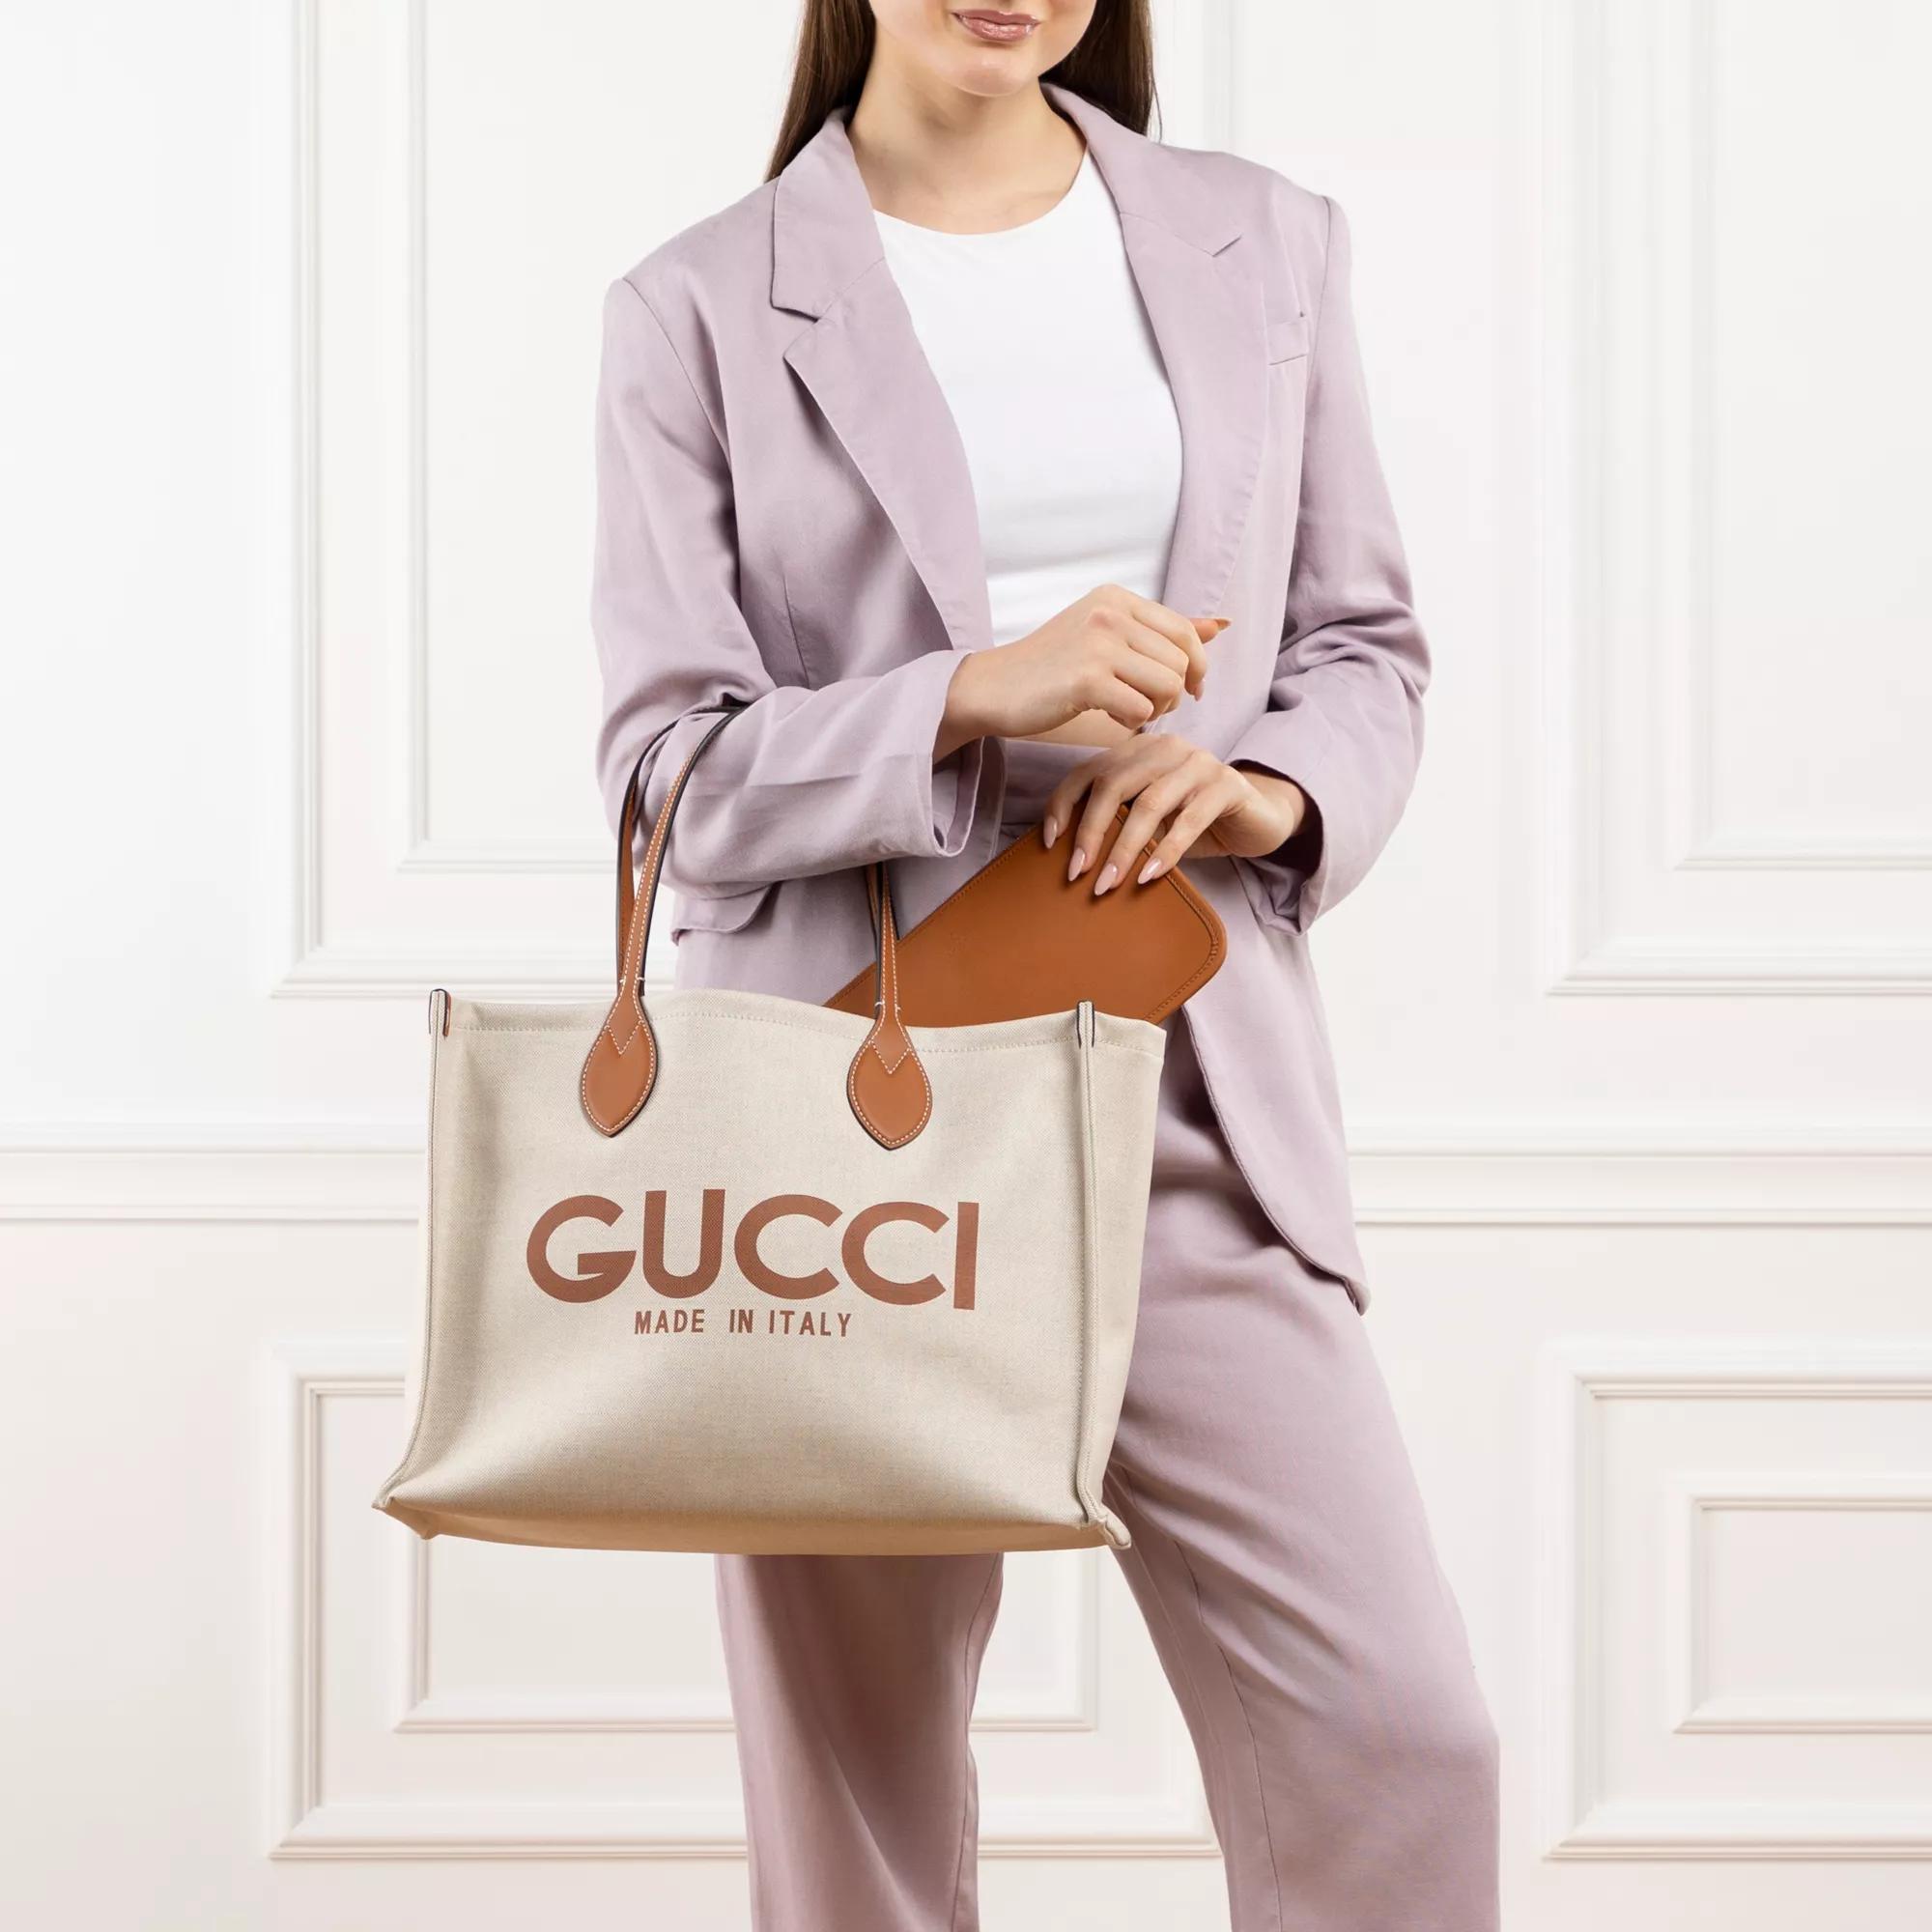 Gucci Totes Print Tote Bag in beige